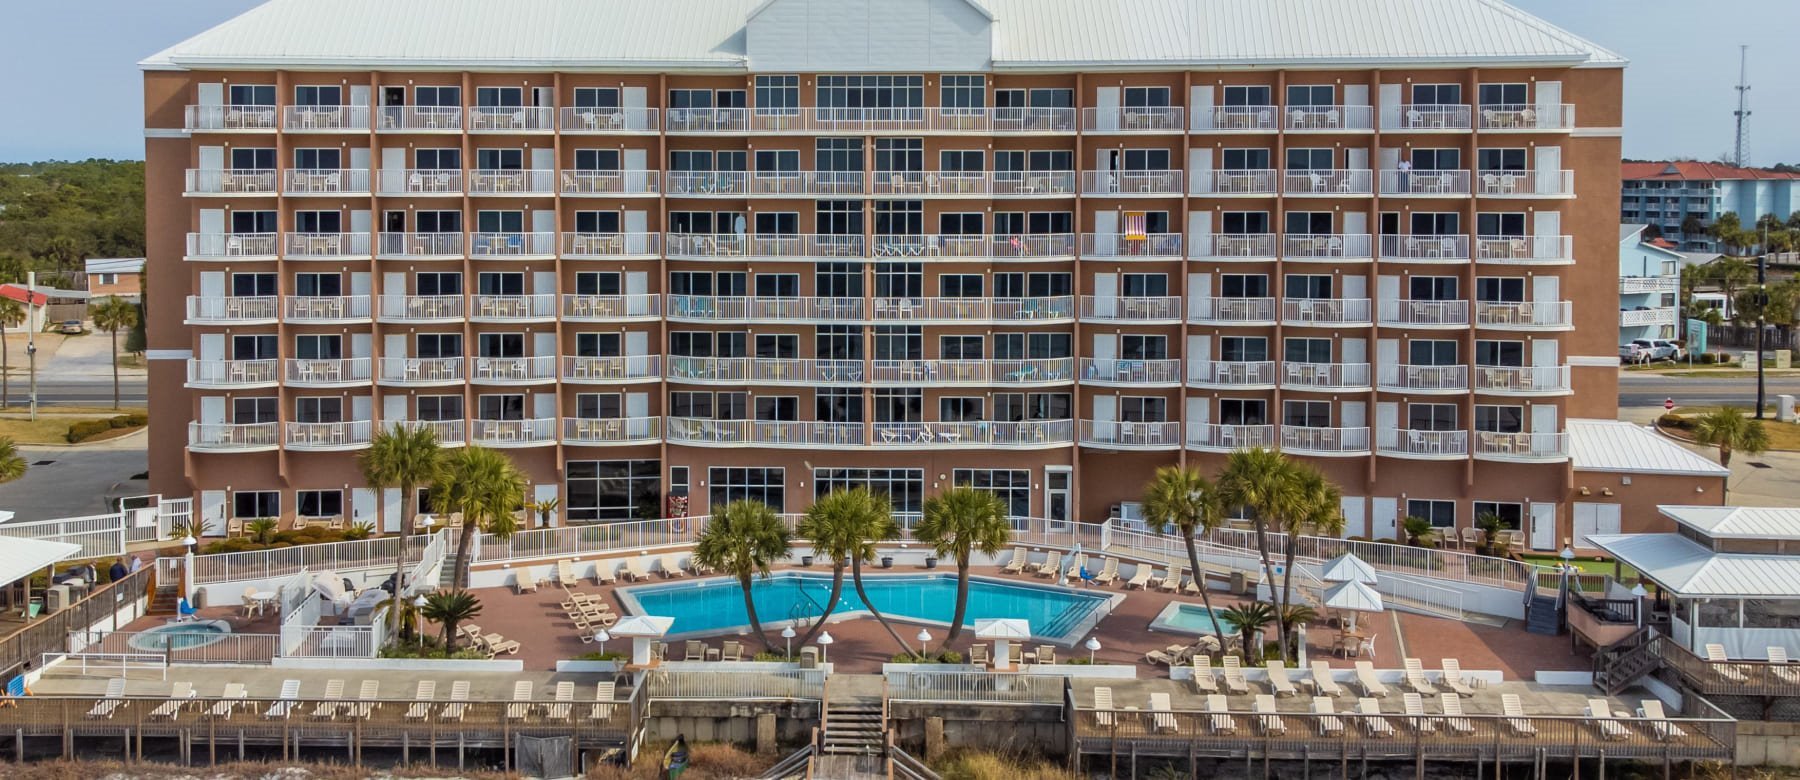 Palmetto Beachfront Resort, Florida